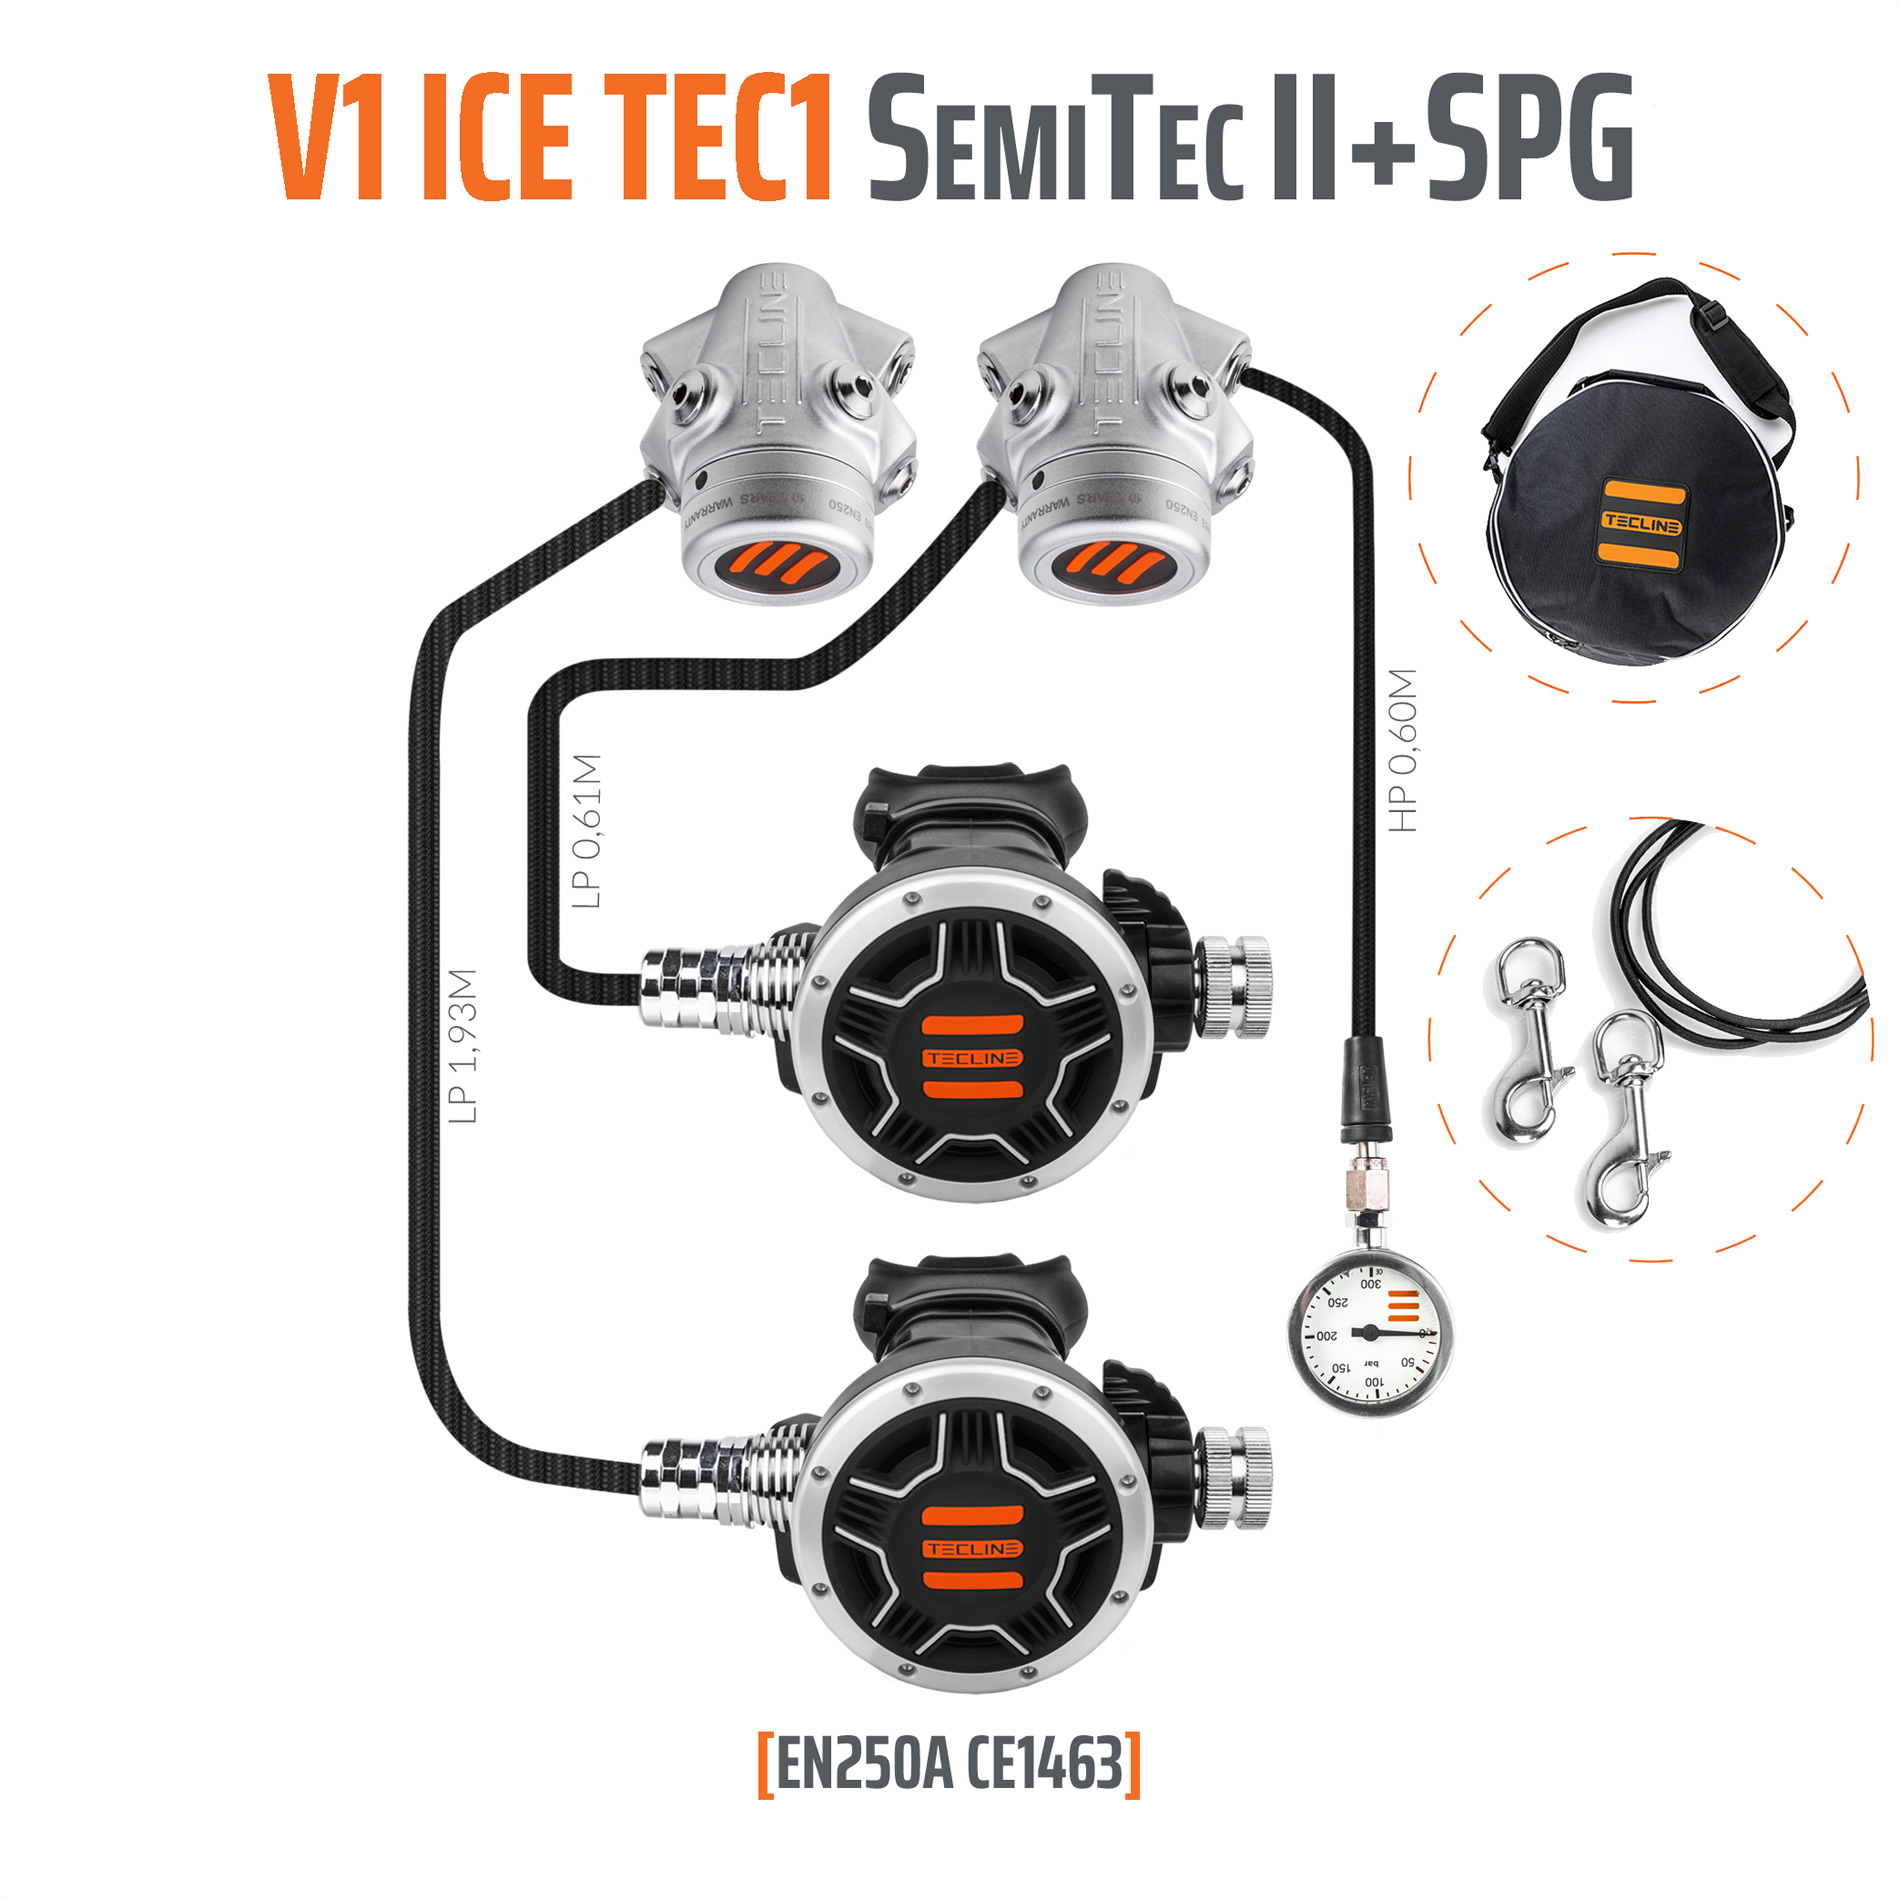 Tecline Regulator V1 ICE TEC1 SemiTec II with SPG – EN250A